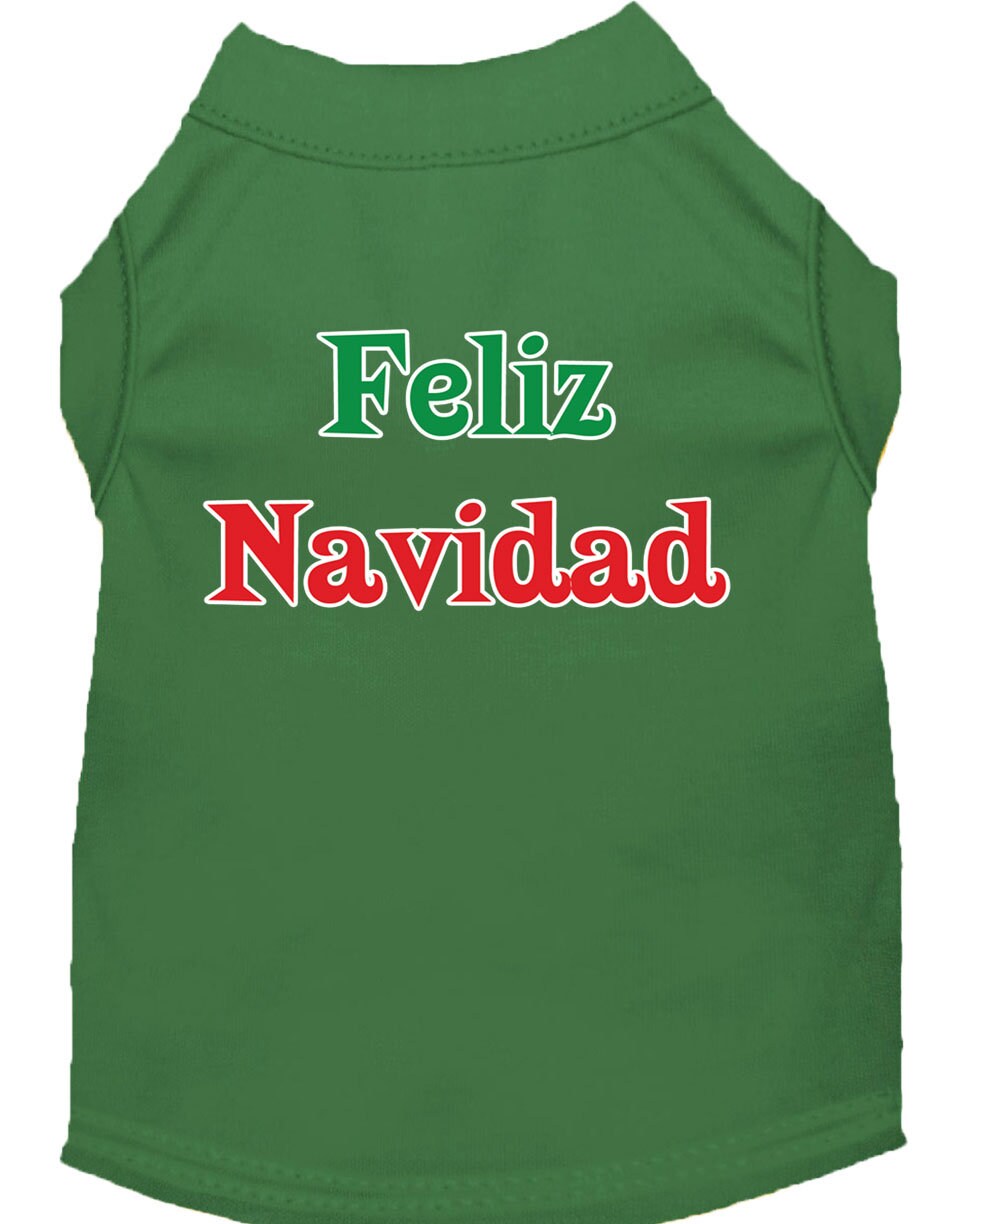 Christmas Screenprinted Dog Shirt, "Feliz Navidad"